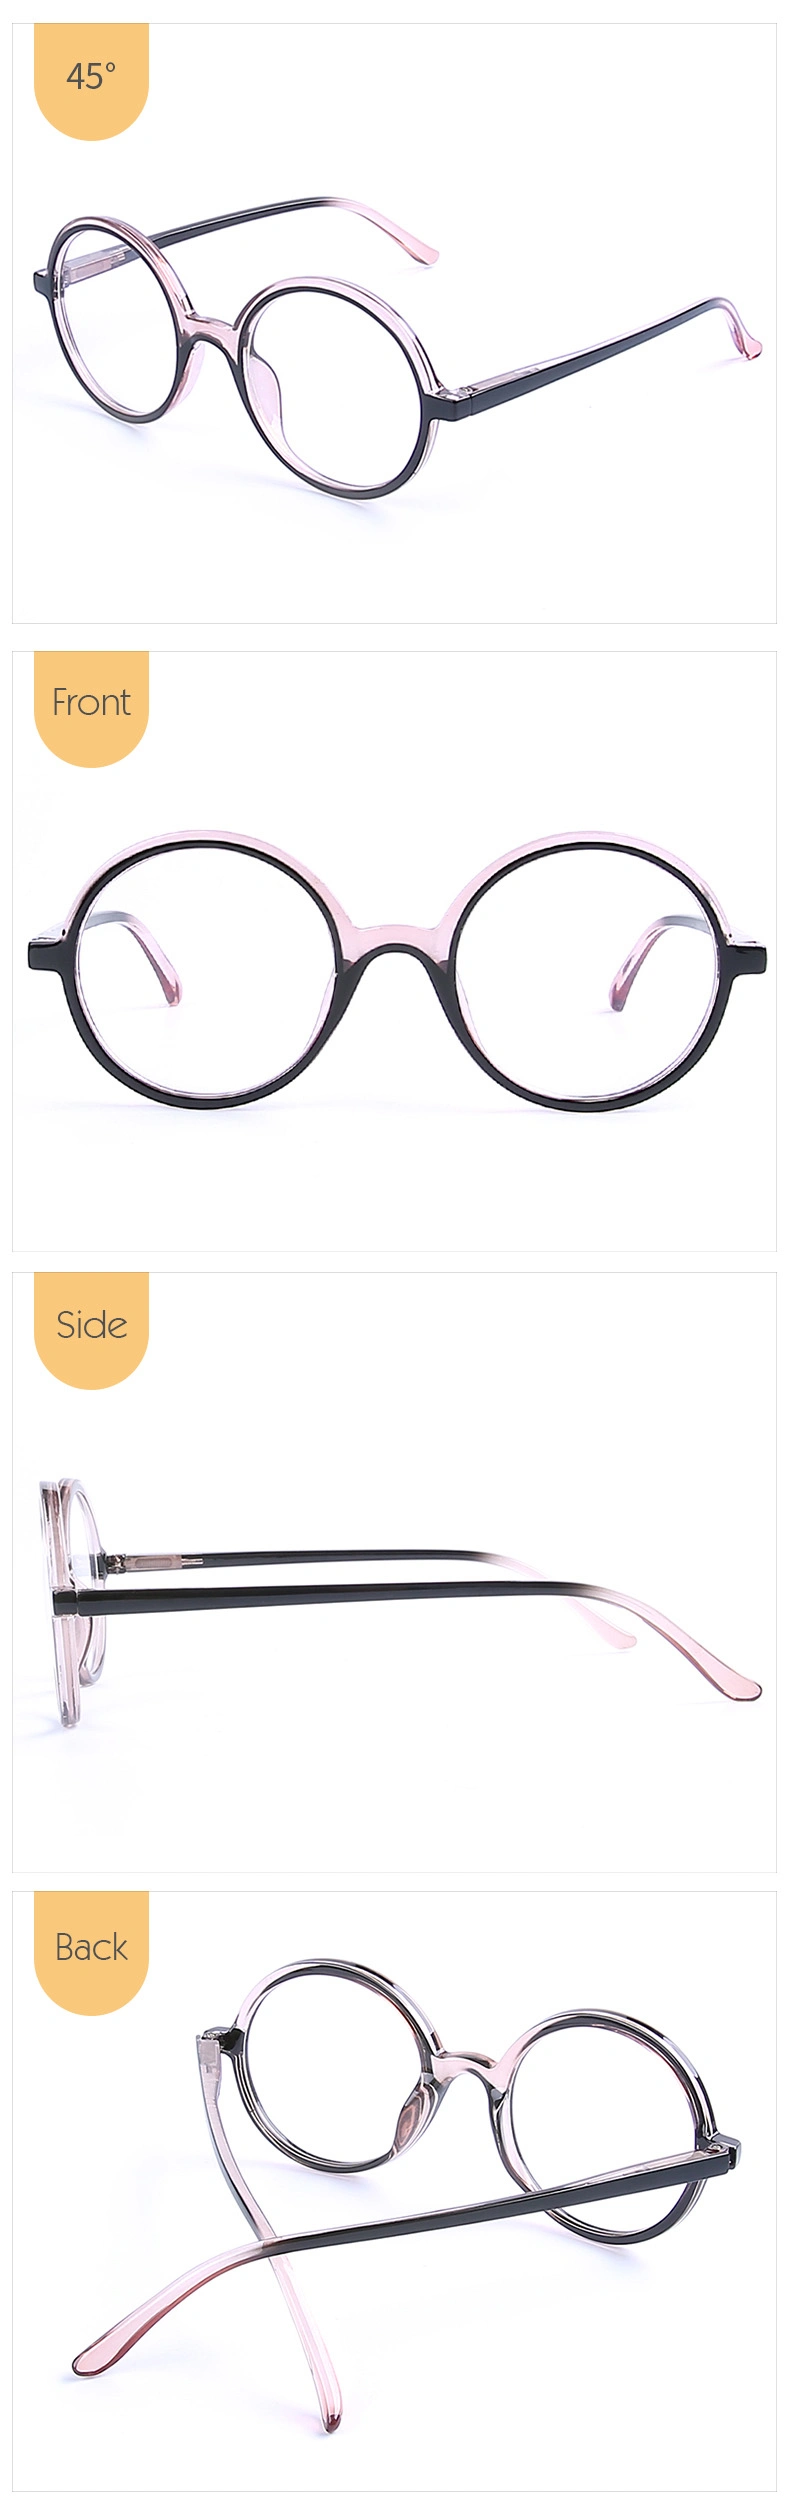 Fashion Cheap Reading Glasses Wholesale Round Reading Glasses